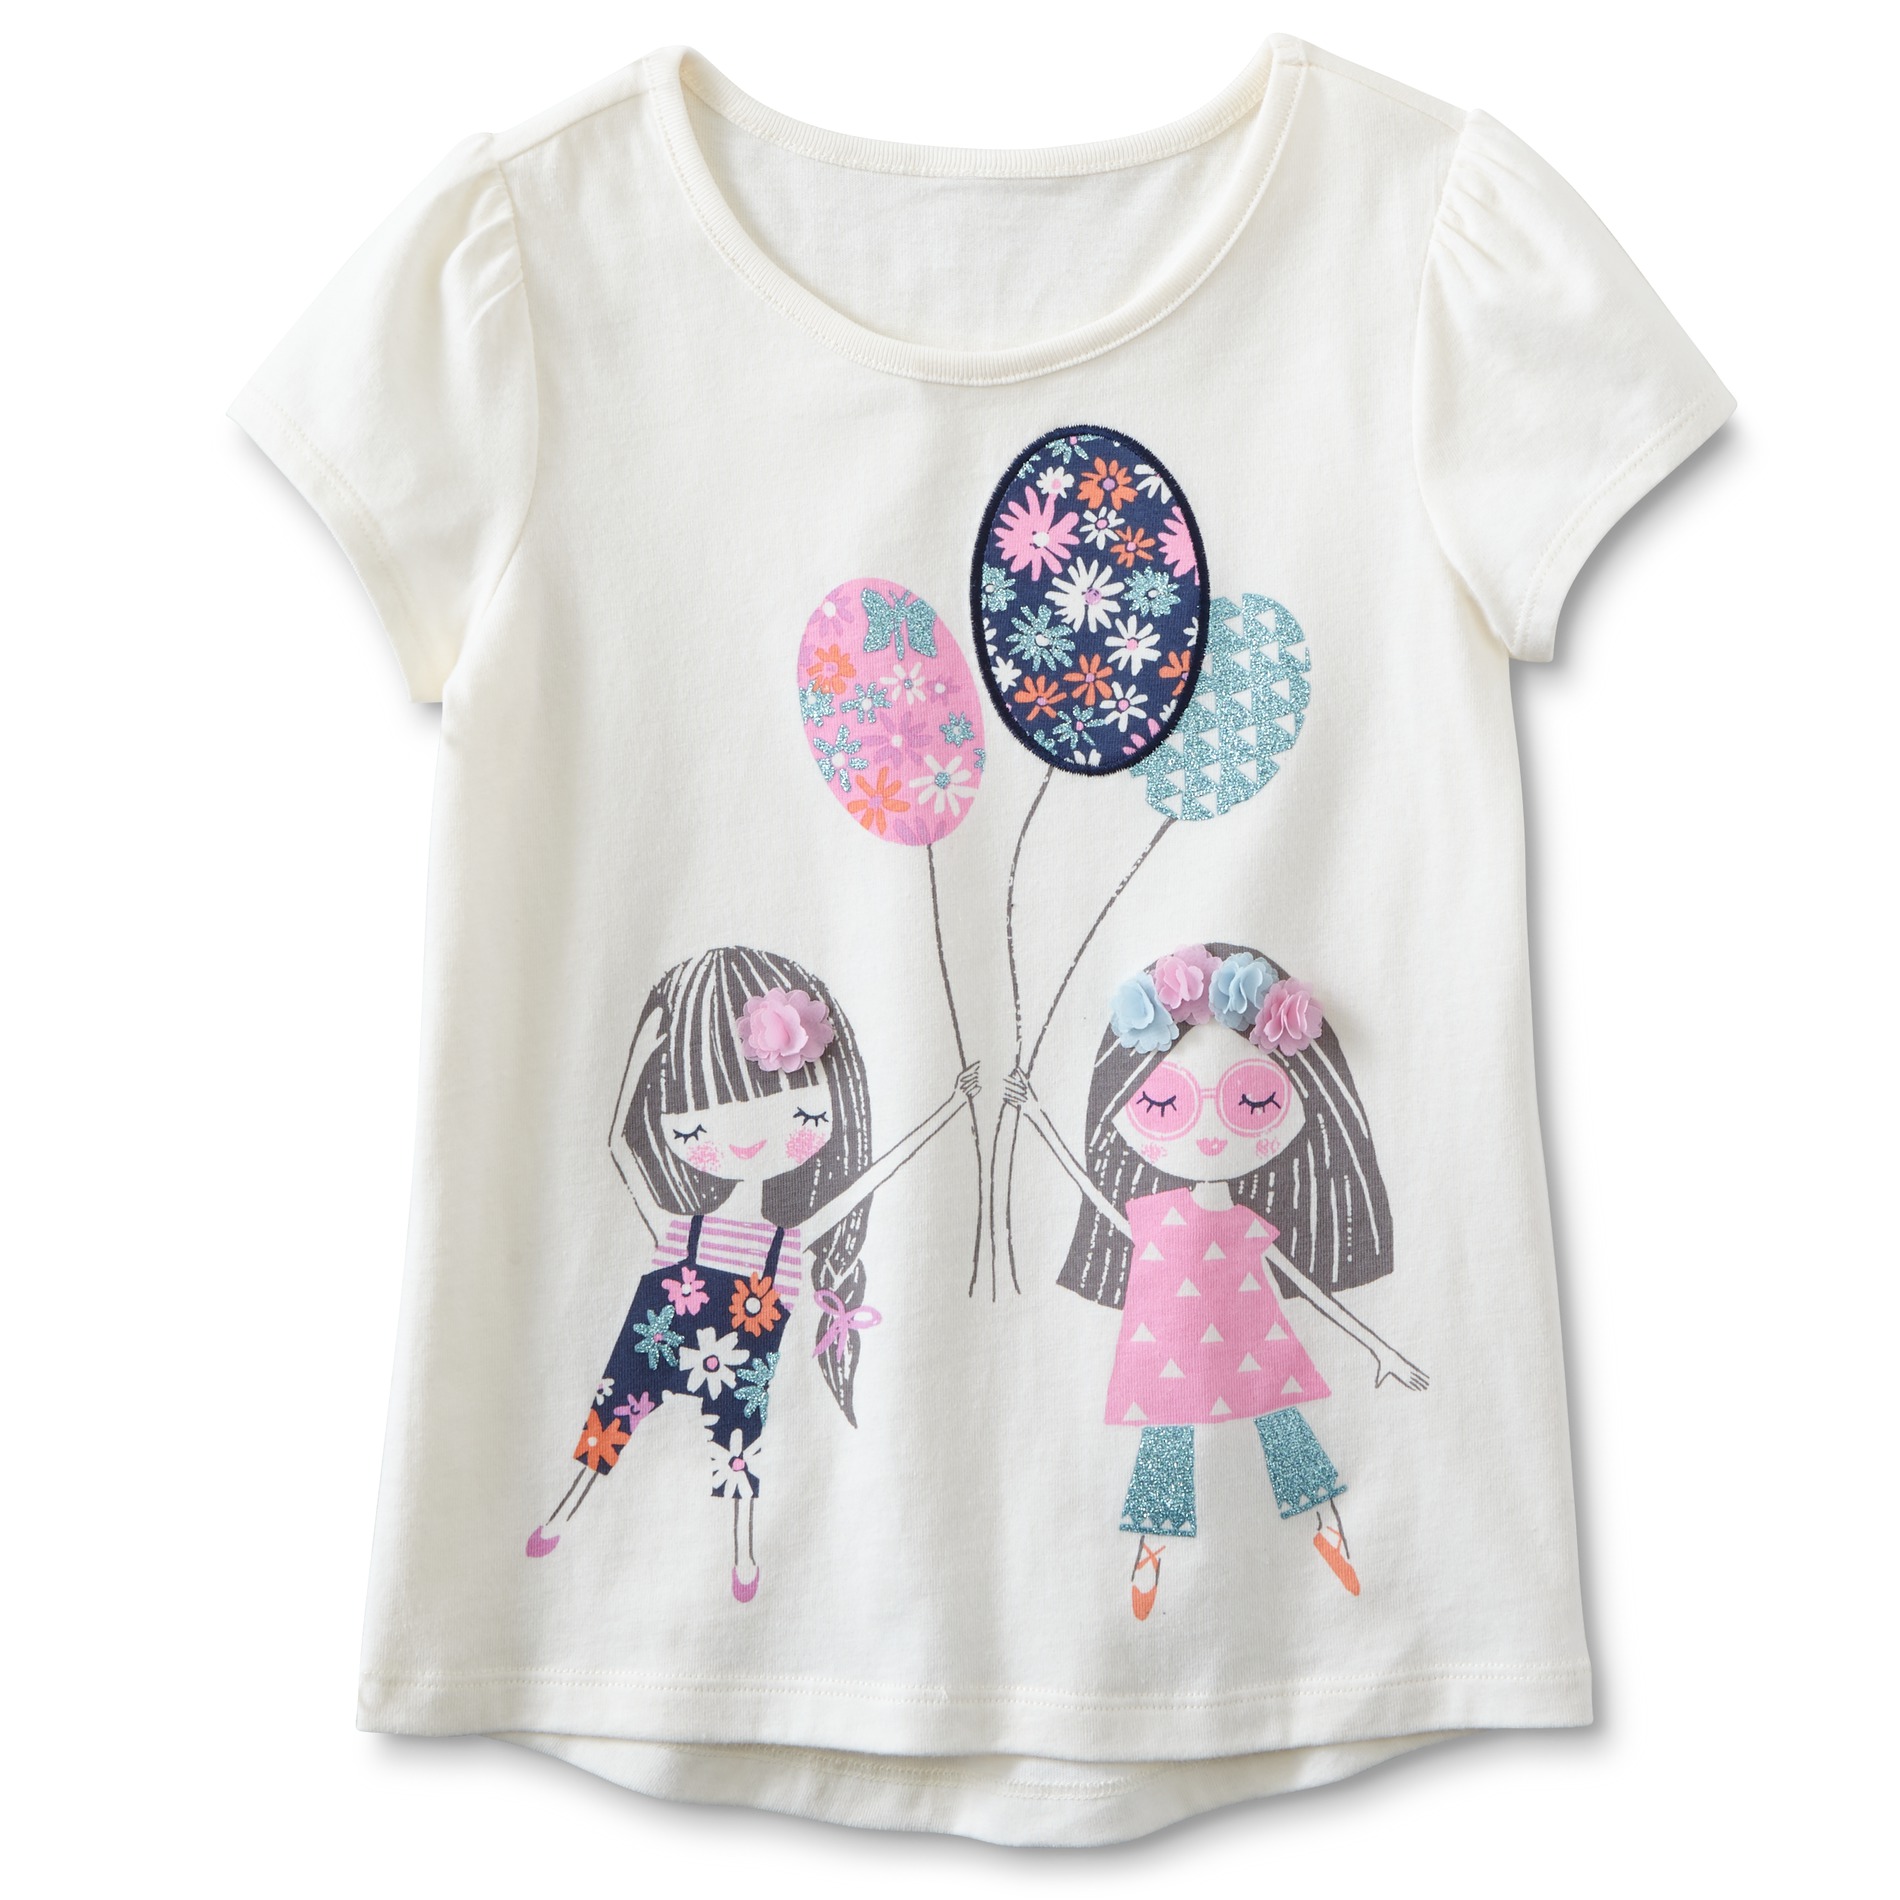 Toughskins Infant & Toddler Girls' Embellished T-Shirt - Balloons